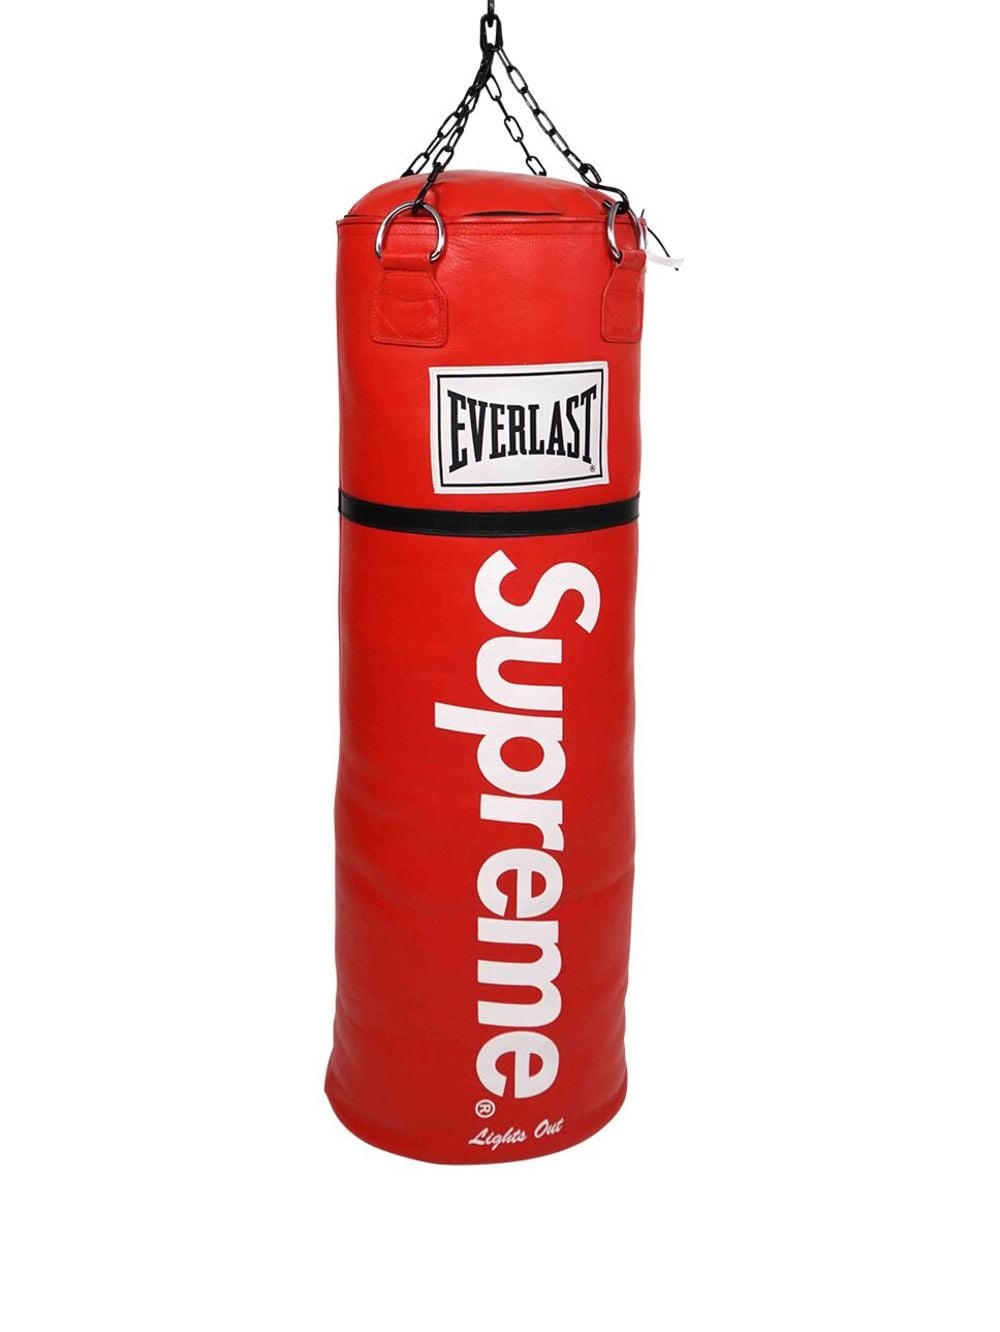 Supreme x Everlast leather heavy bag - Red von Supreme